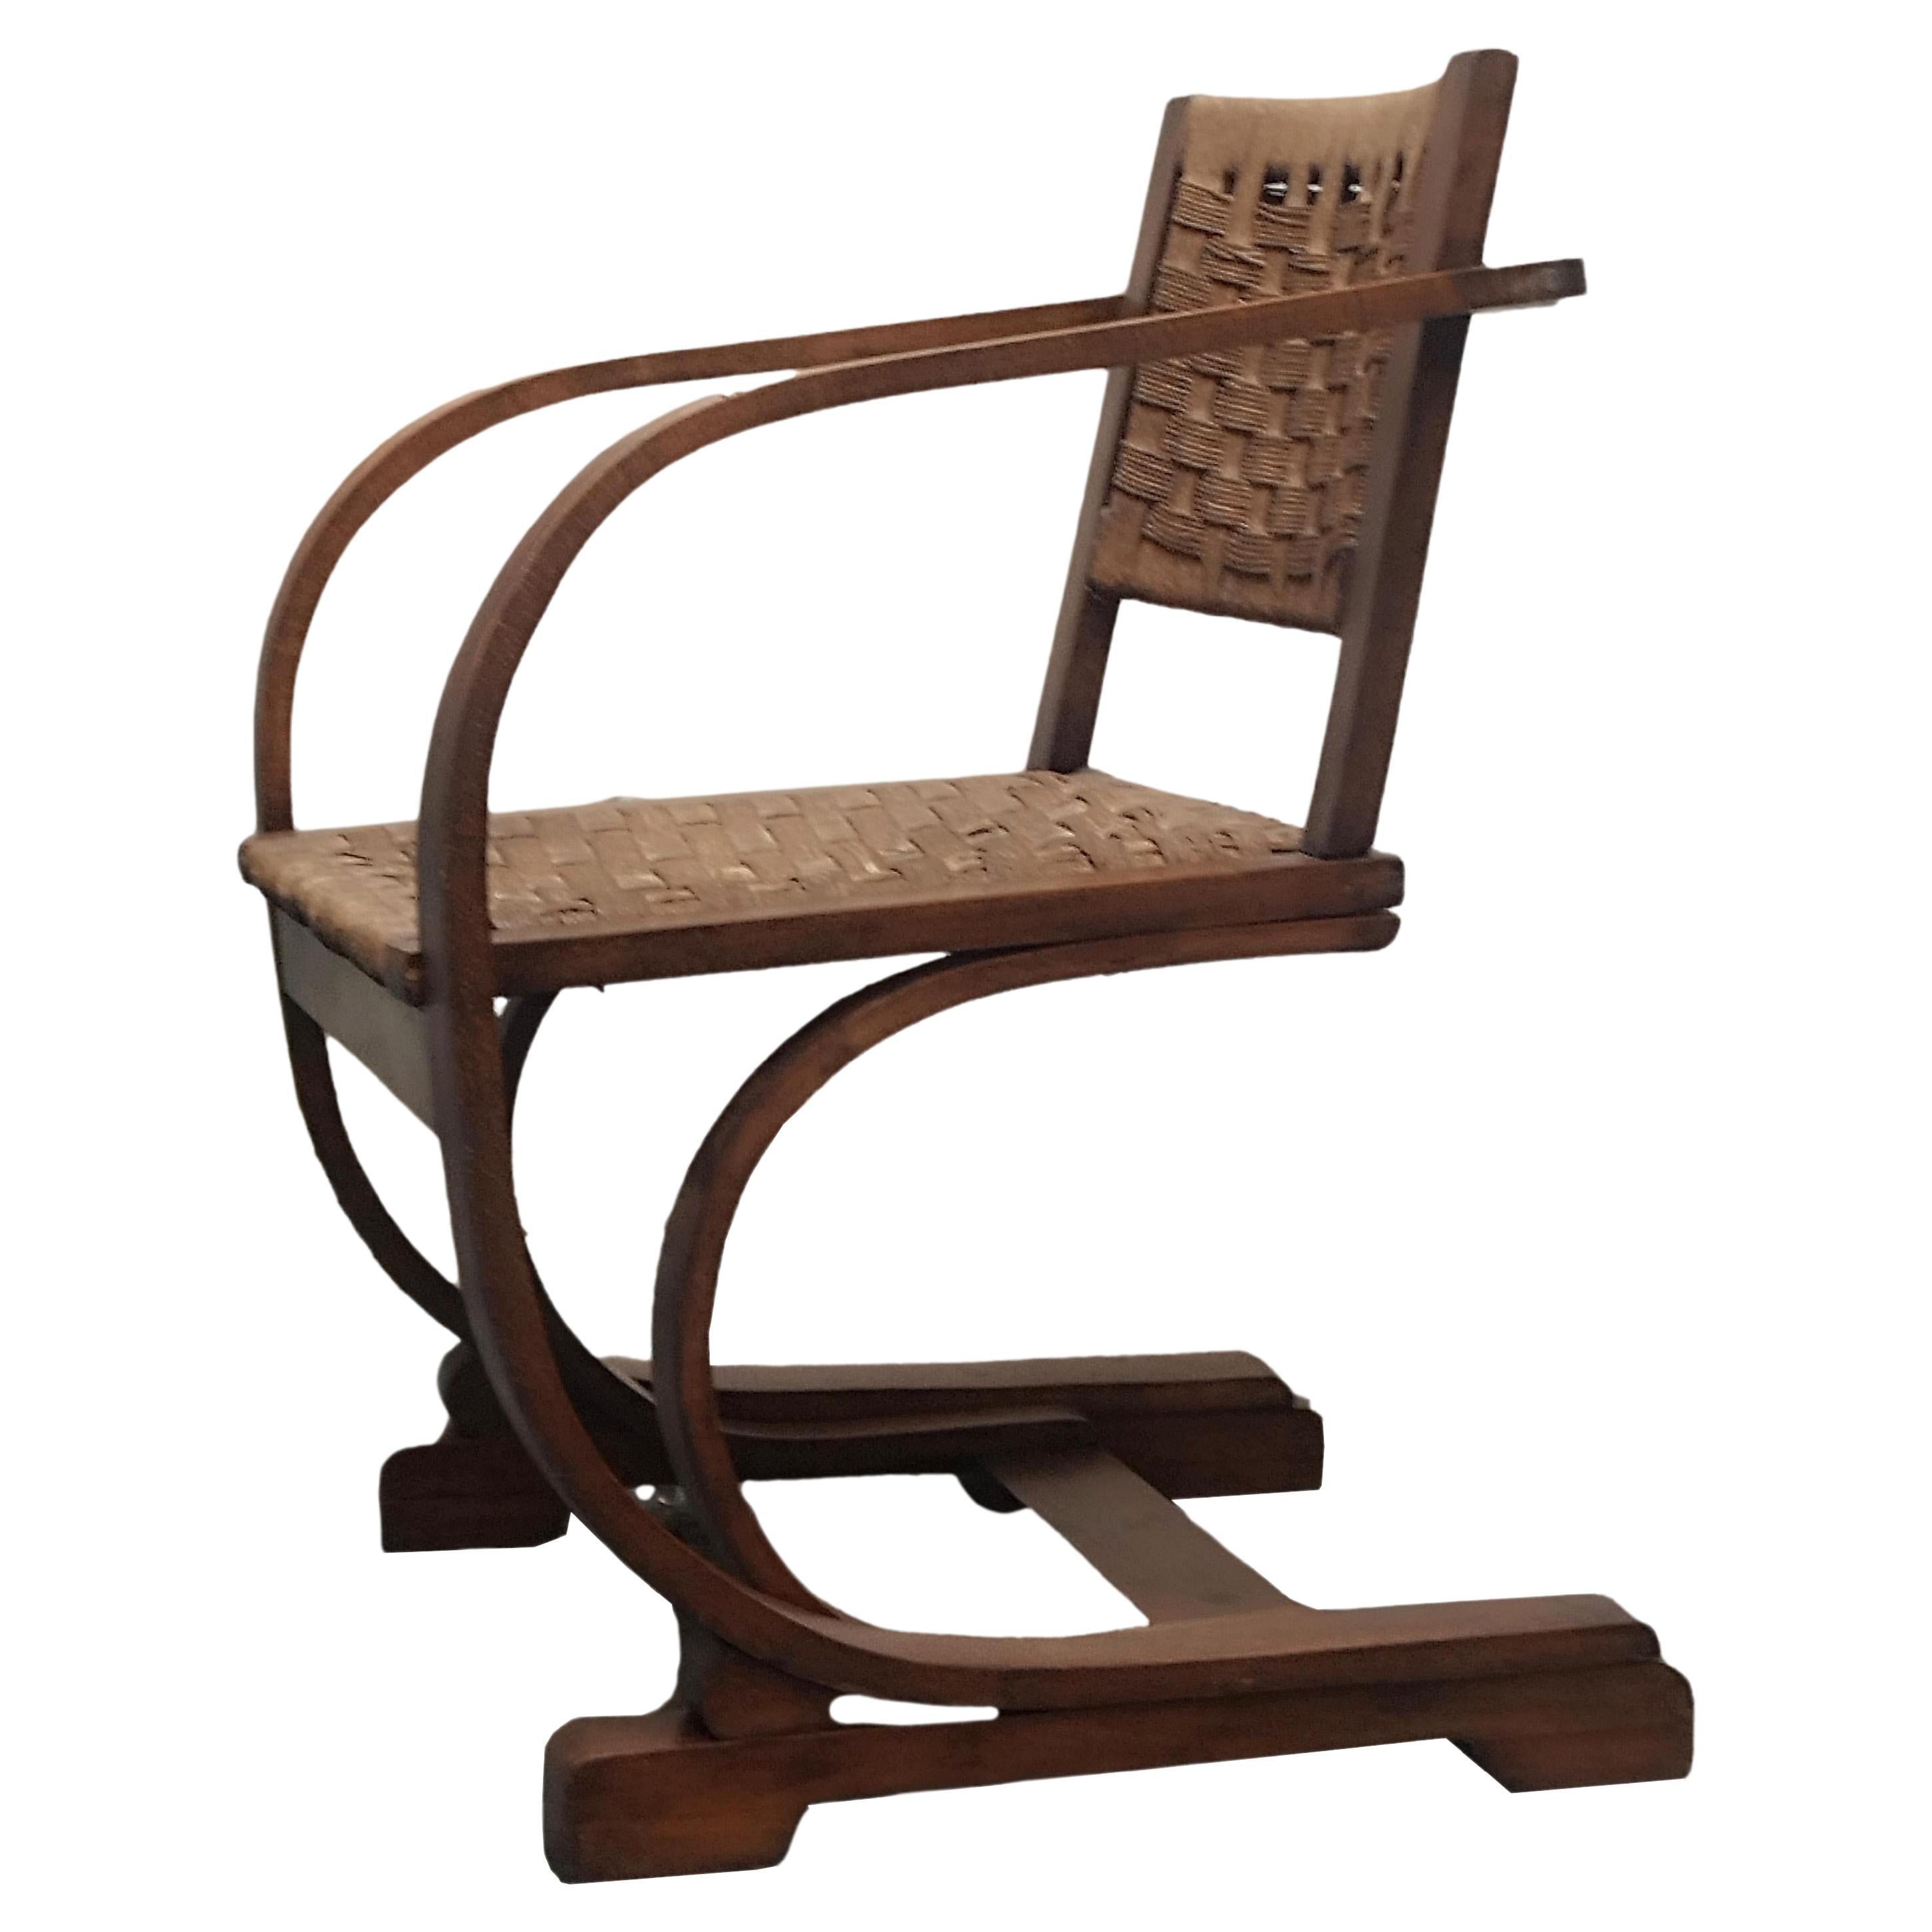 Bas Van Pelt Art Deco Bentwood Lounge Chair, Netherlands 1950s